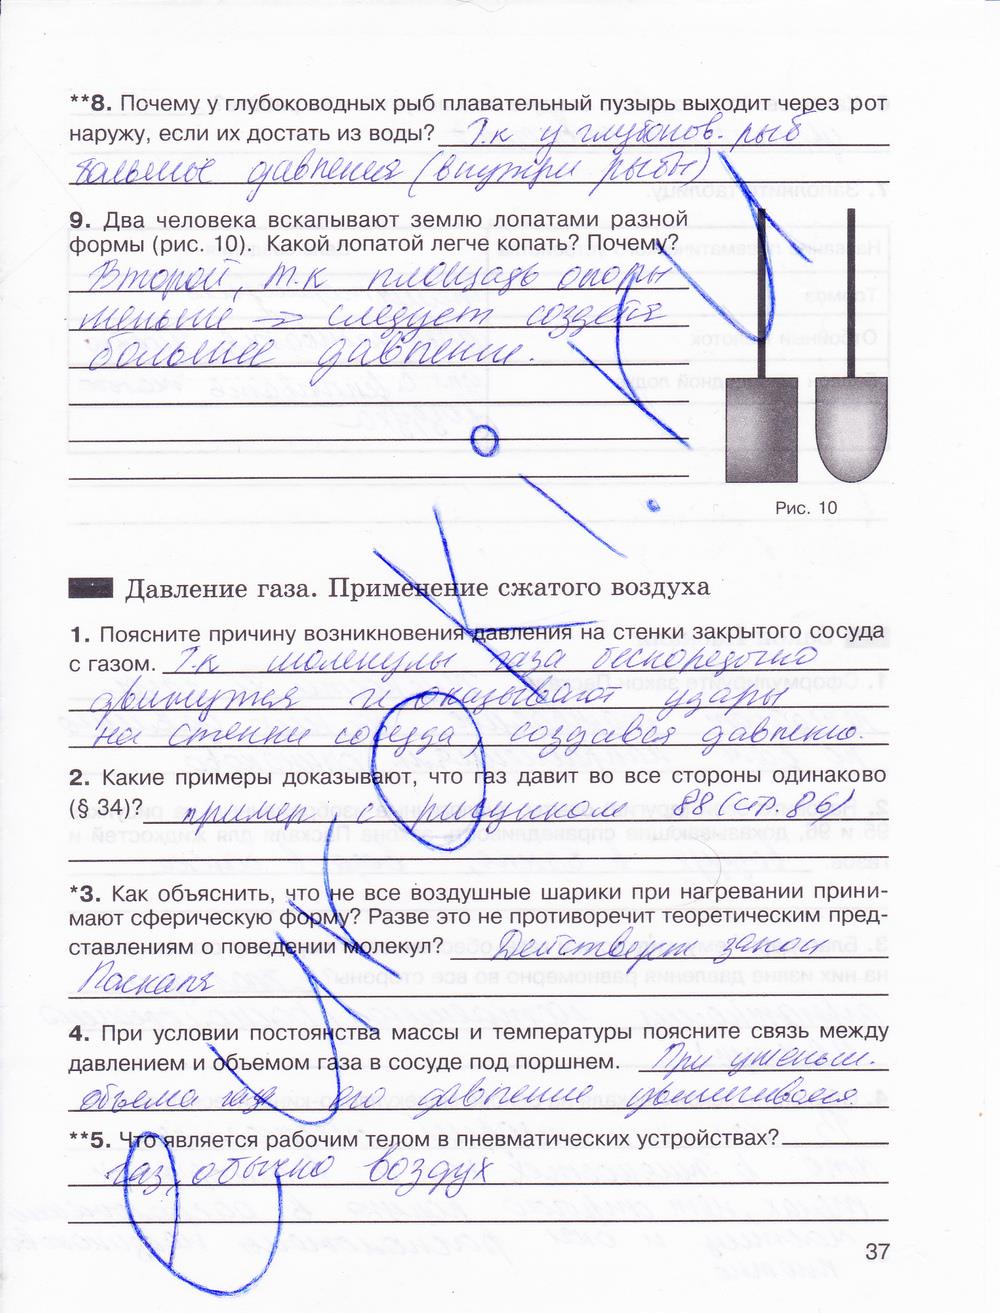 гдз 7 класс рабочая тетрадь страница 37 физика Мартынова, Бовин, Коротаев